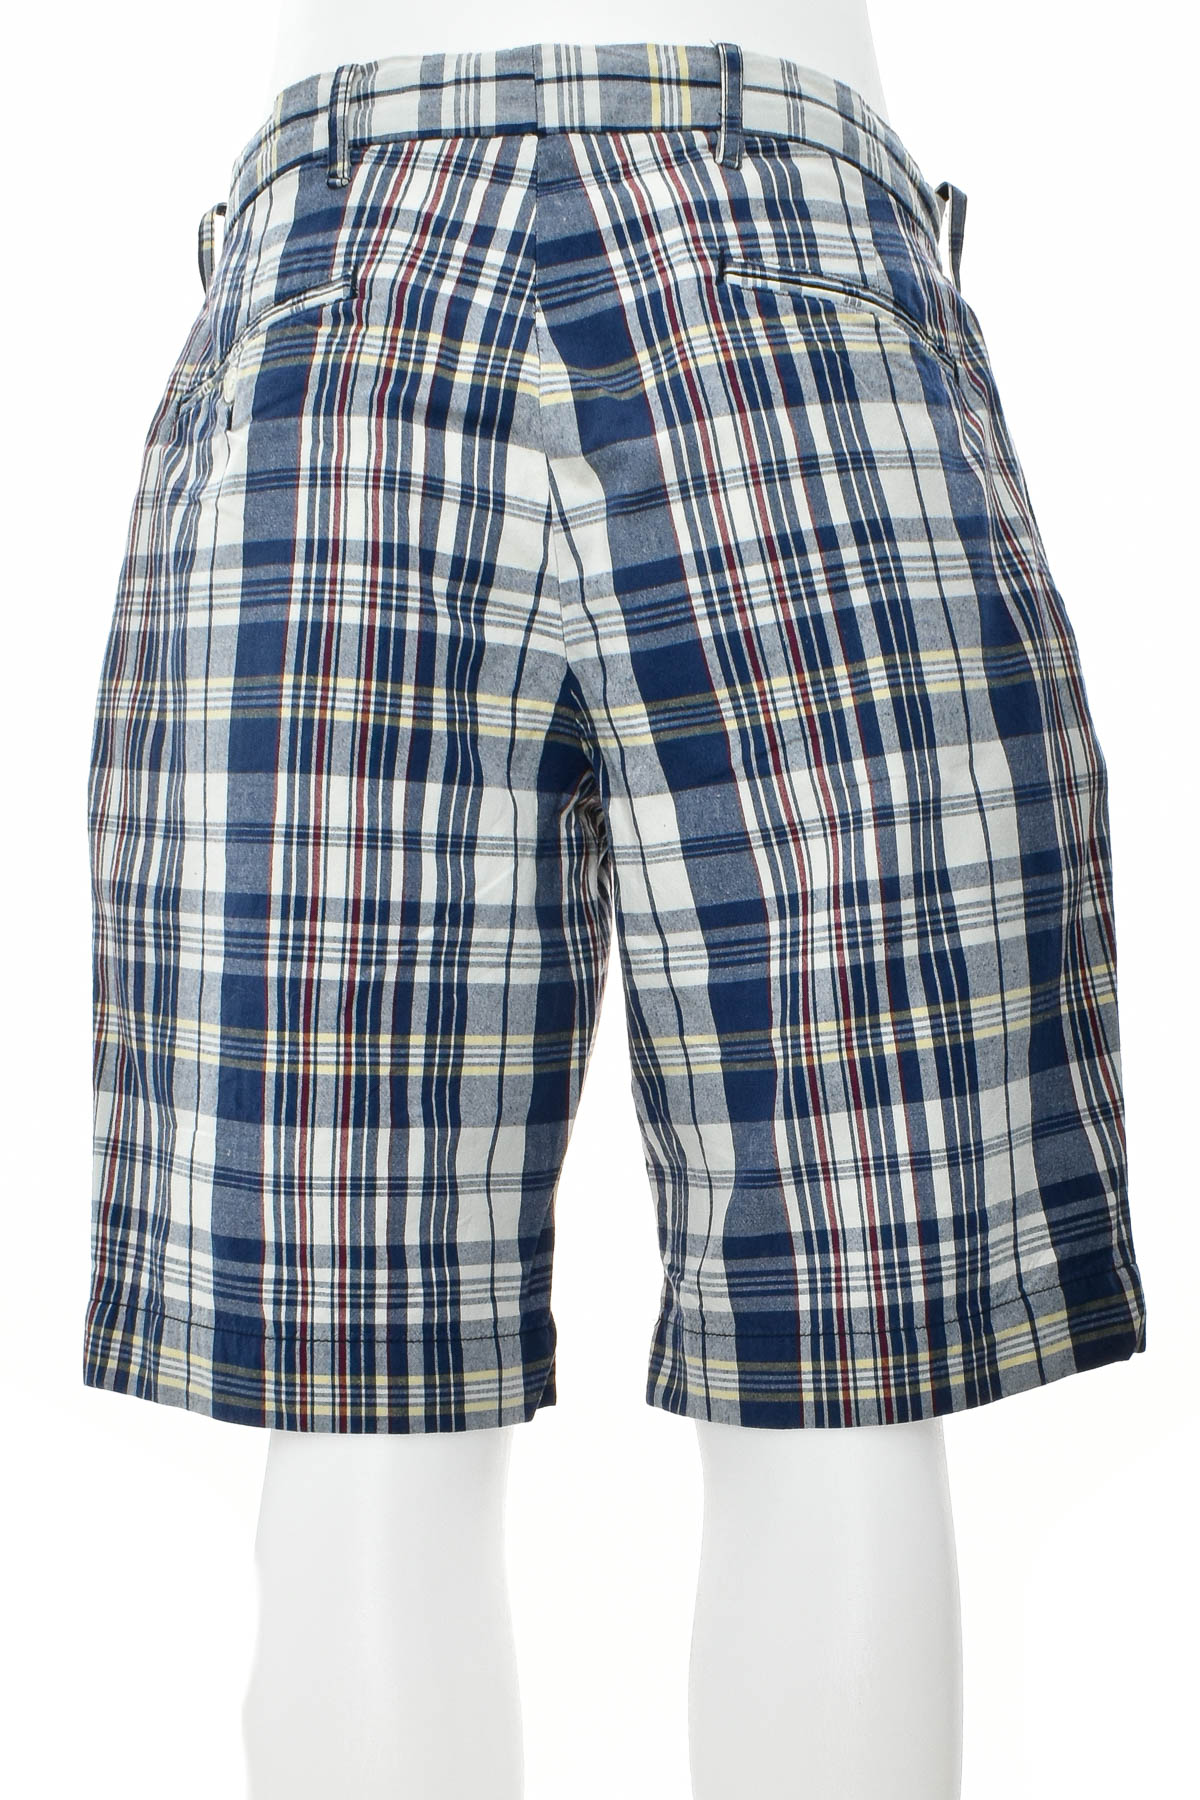 Pantaloni scurți bărbați - Polo by Ralph Lauren - 1